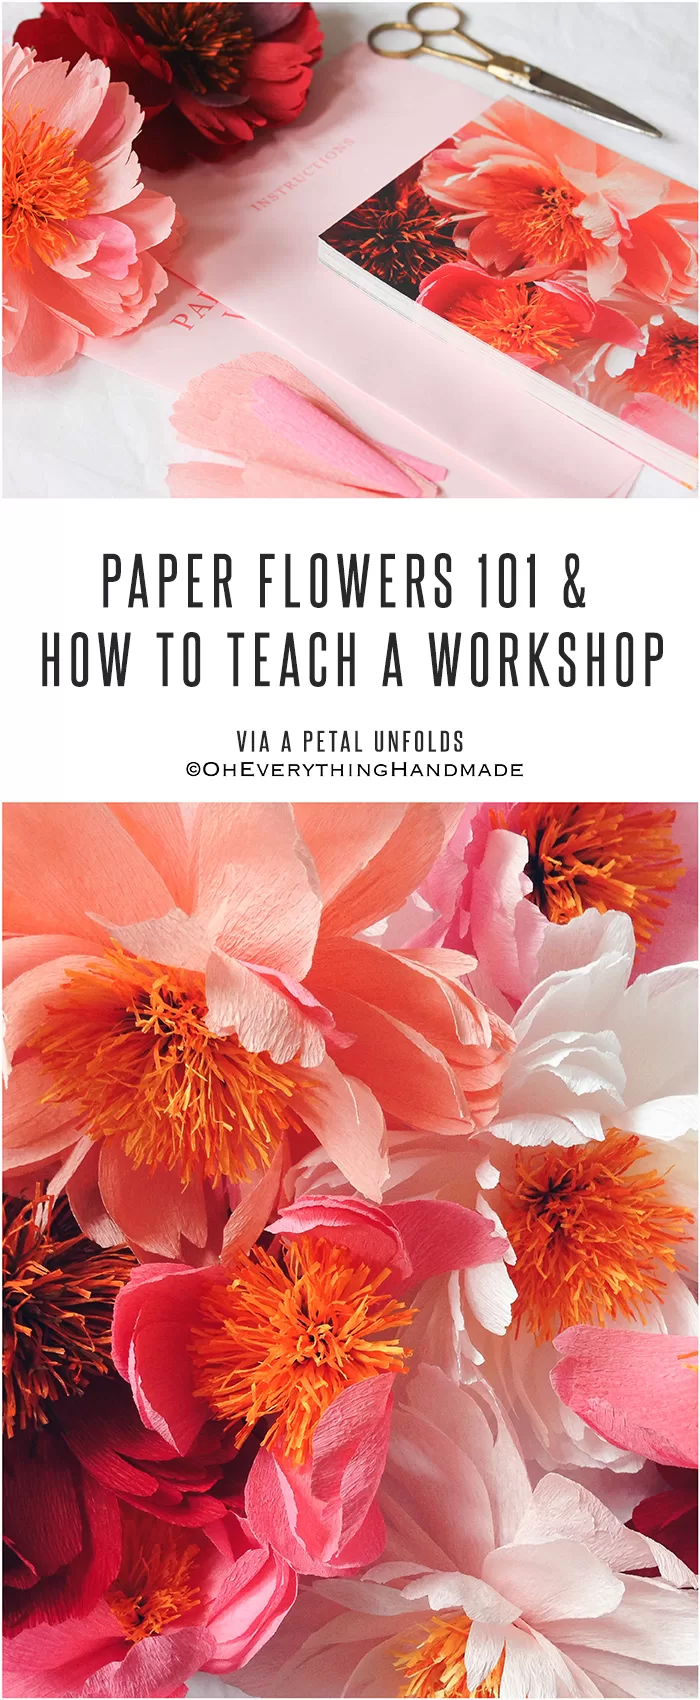 paper-flowers-101-how-to-teach-a-workshop-a-petal-unfolds